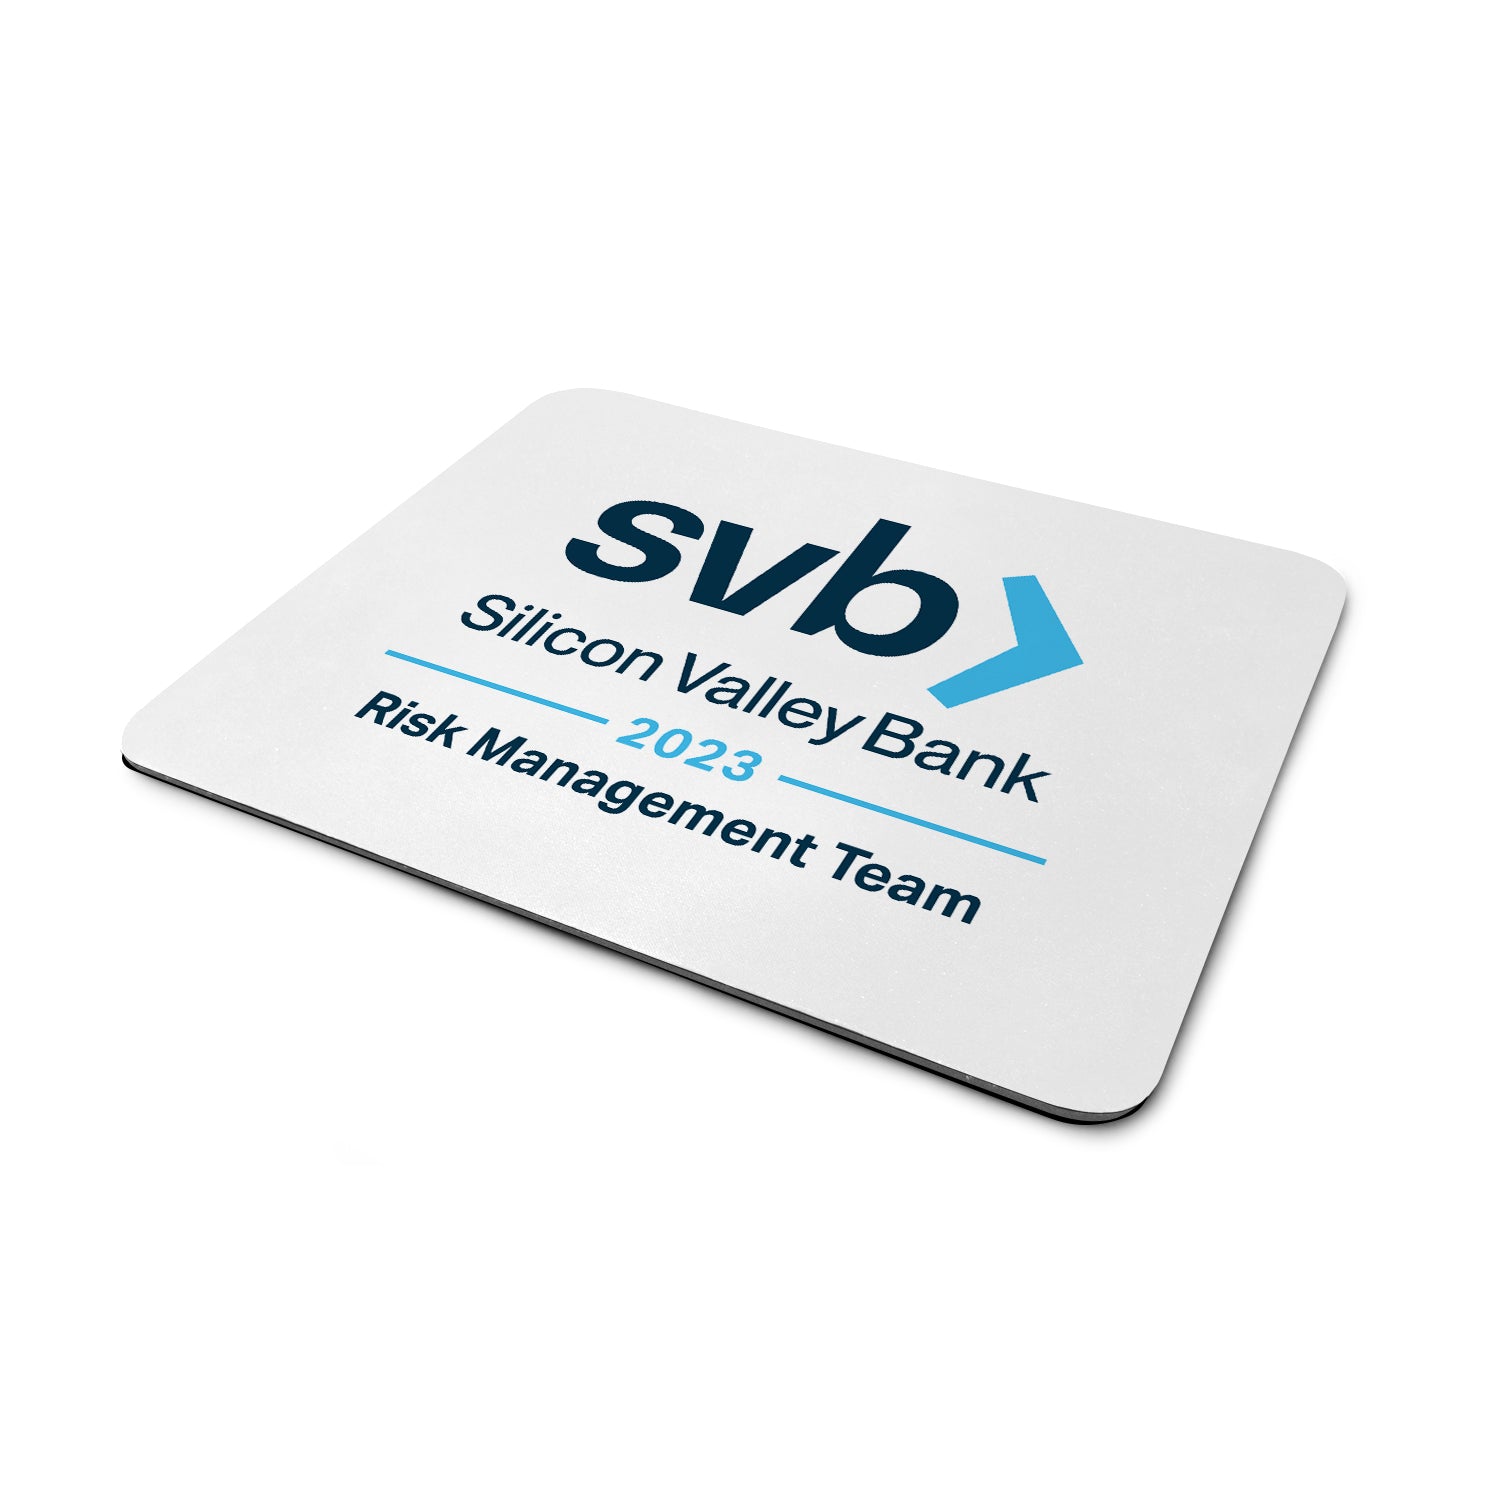 SVB Risk Management Team Mouse Pad